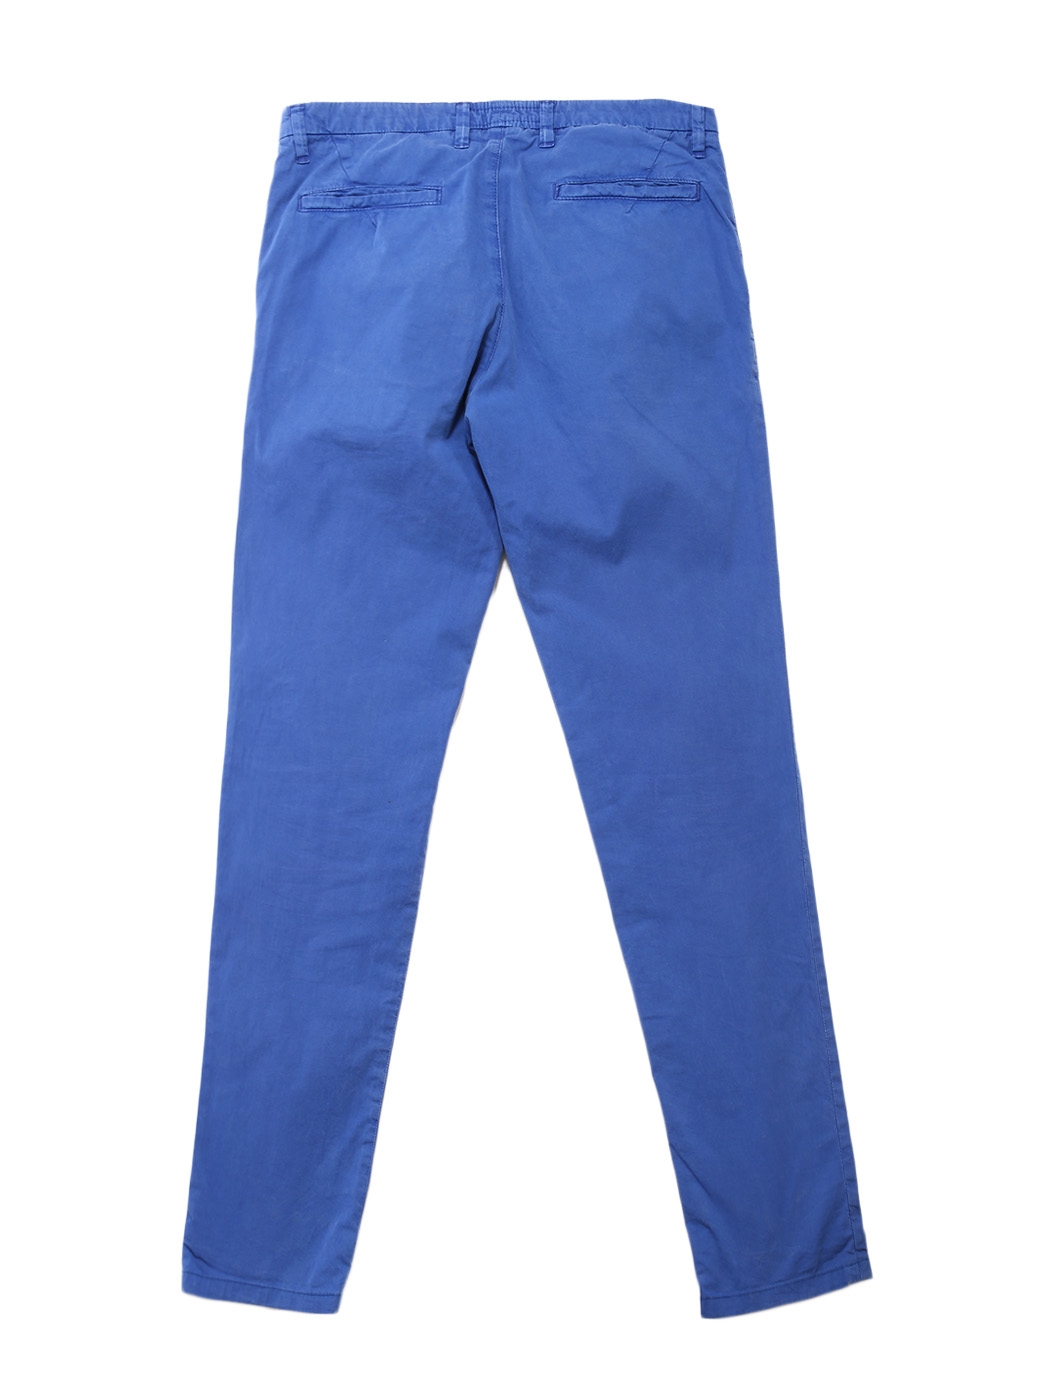 Louise Paris - Royal blue cotton chino pants Size S